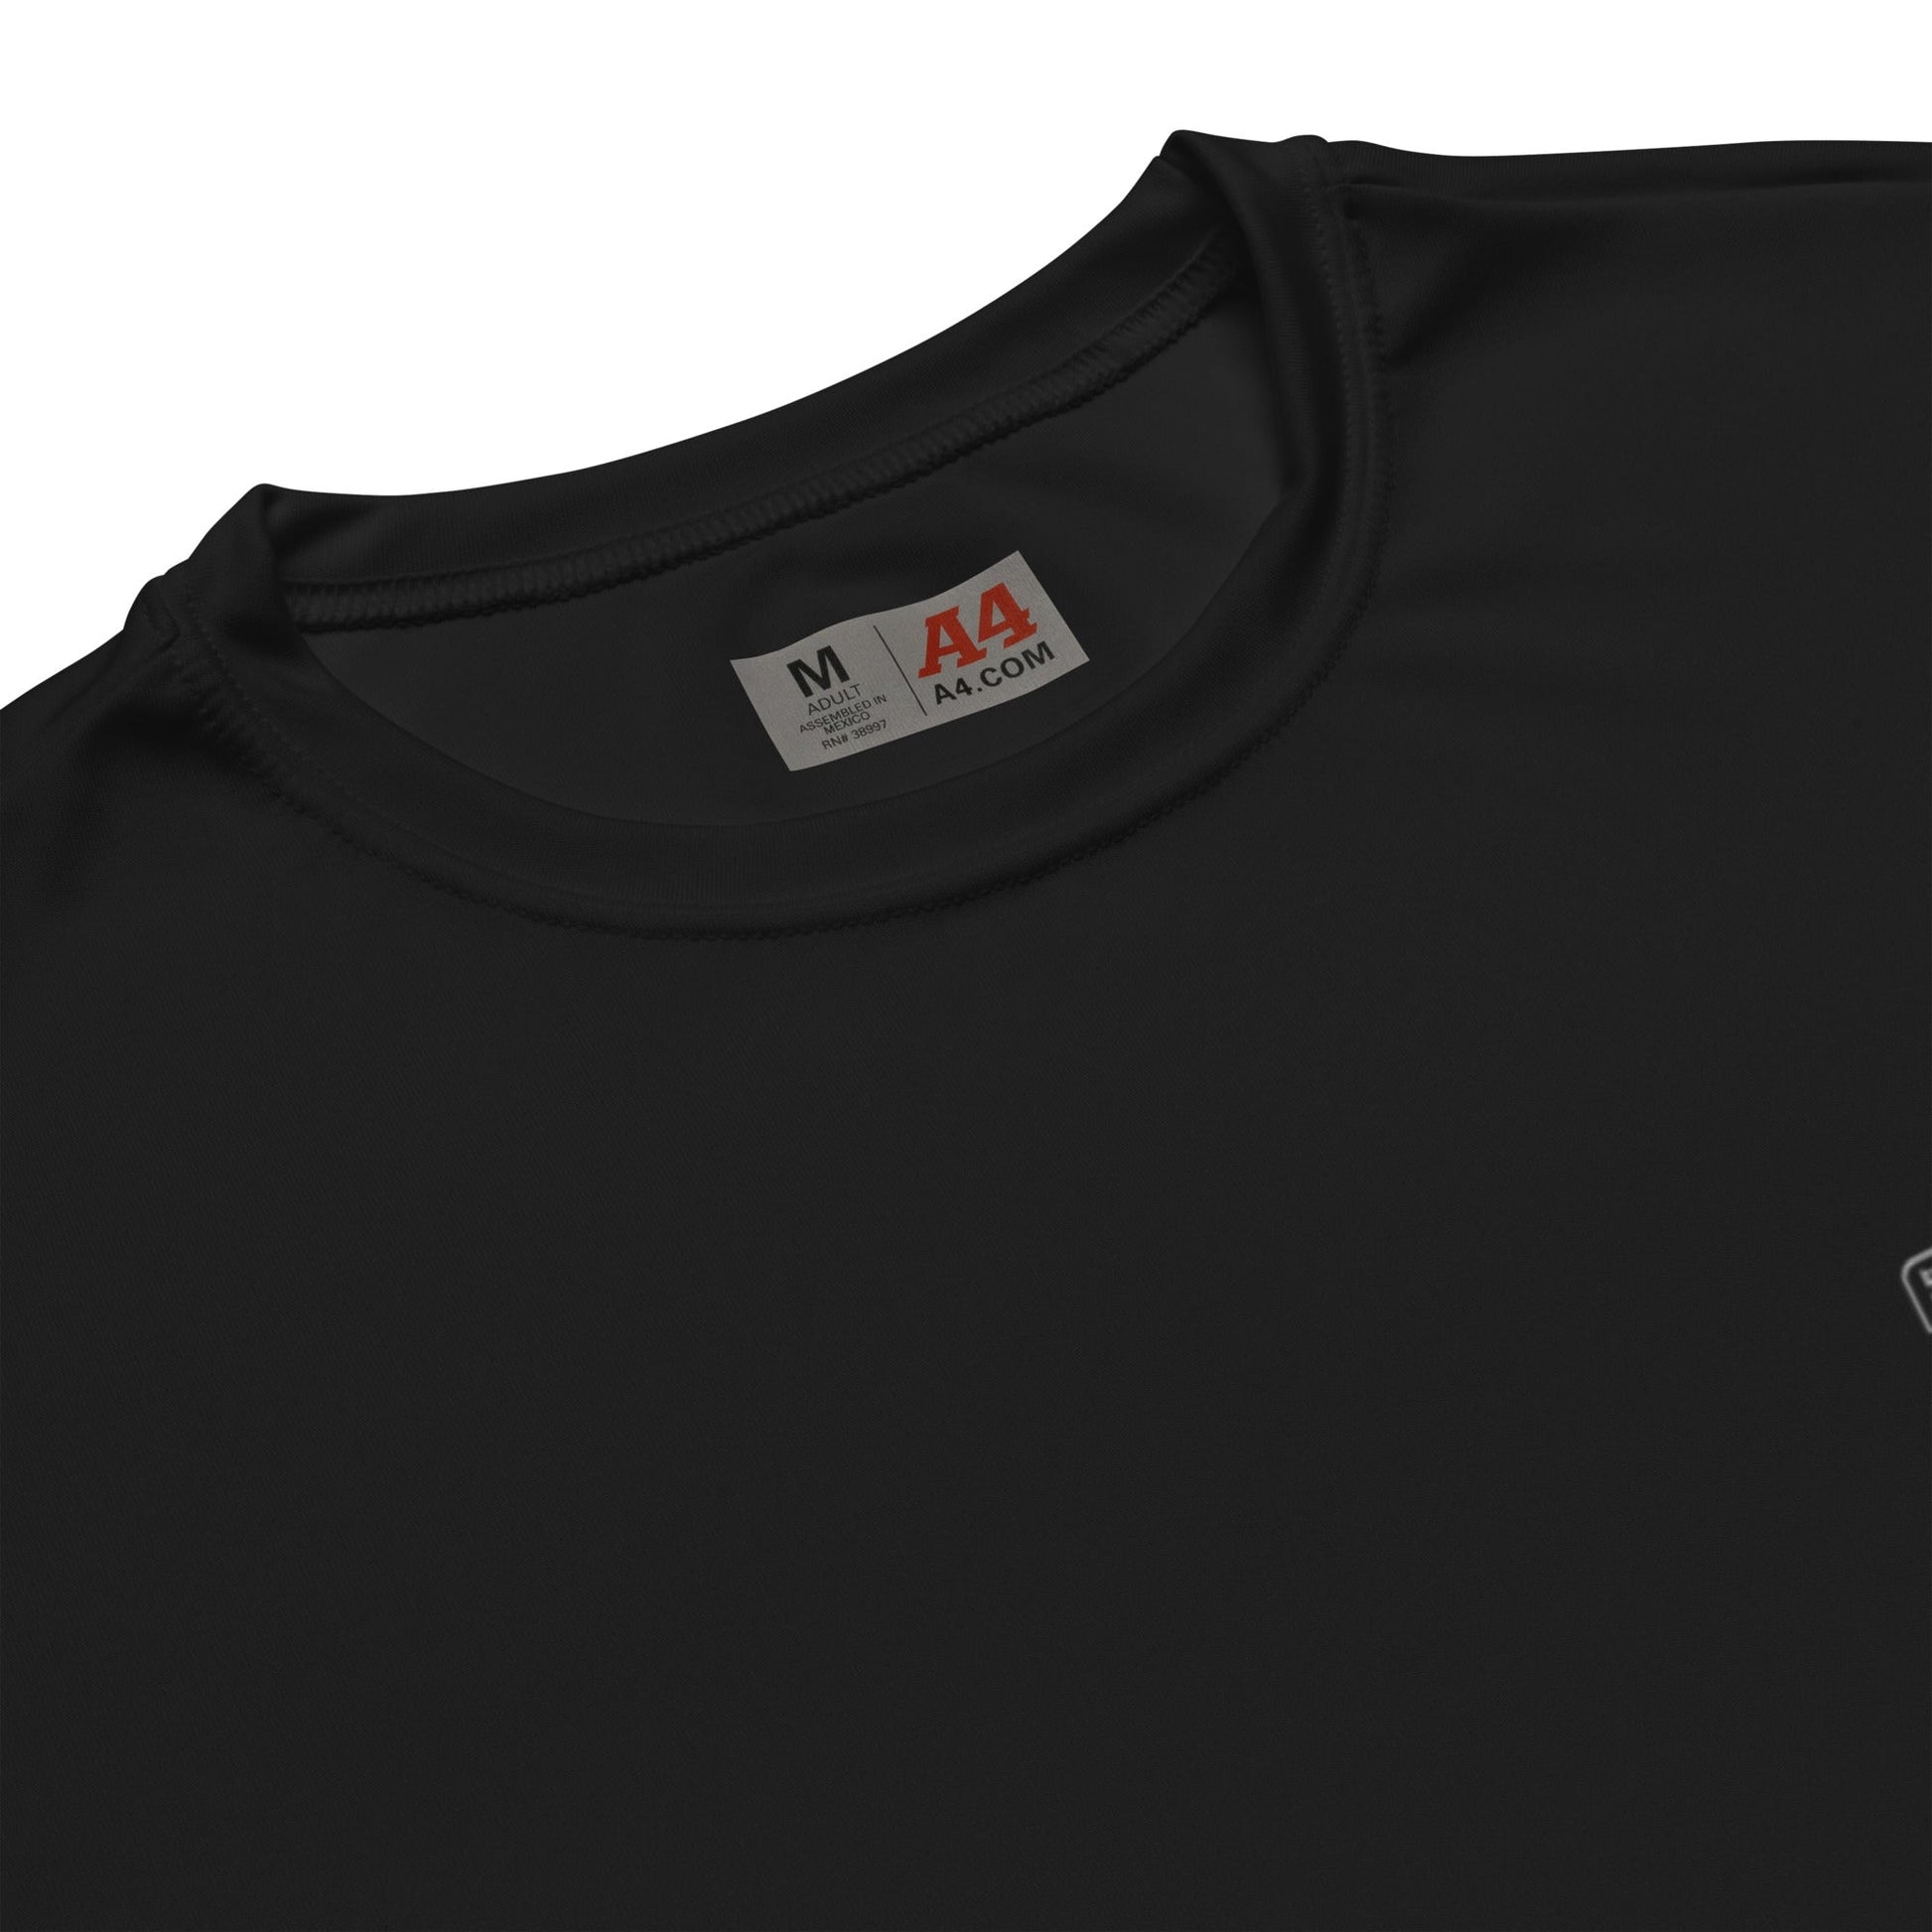 BlackMars performance crew neck t-shirt - Premium  from BlackMars  - Just £28.54! Shop now at BlackMars 28.54BlackMars 